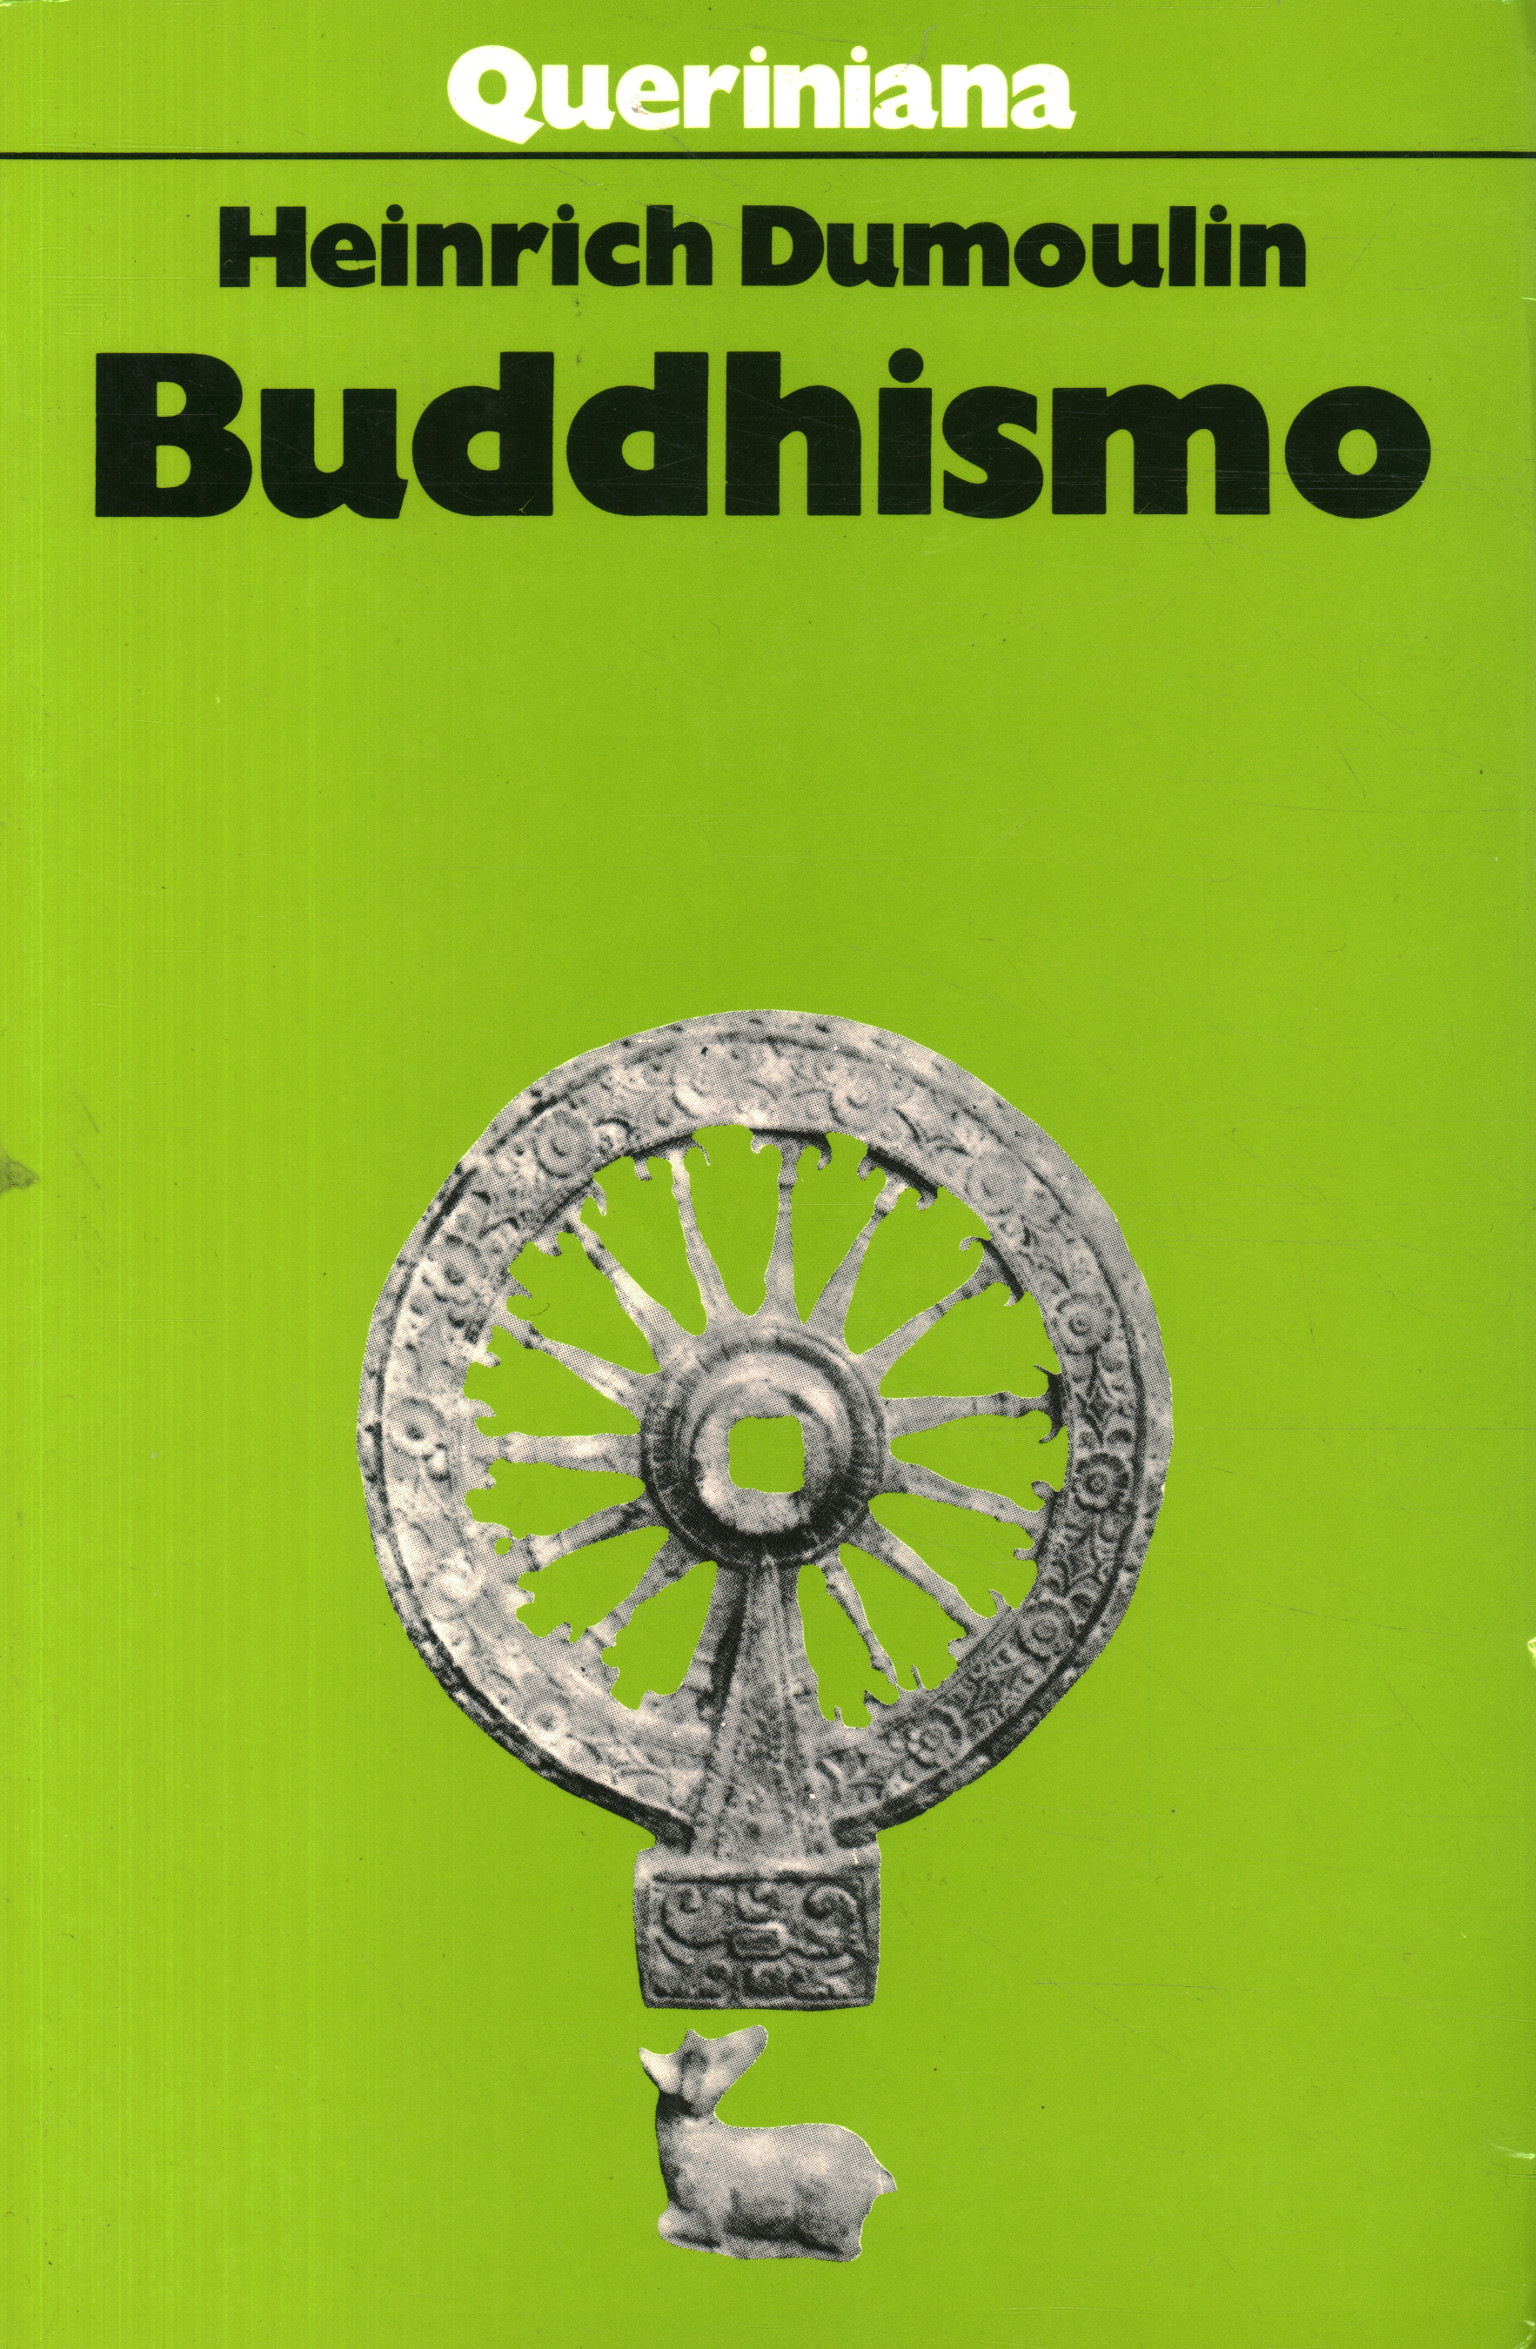 bouddhisme